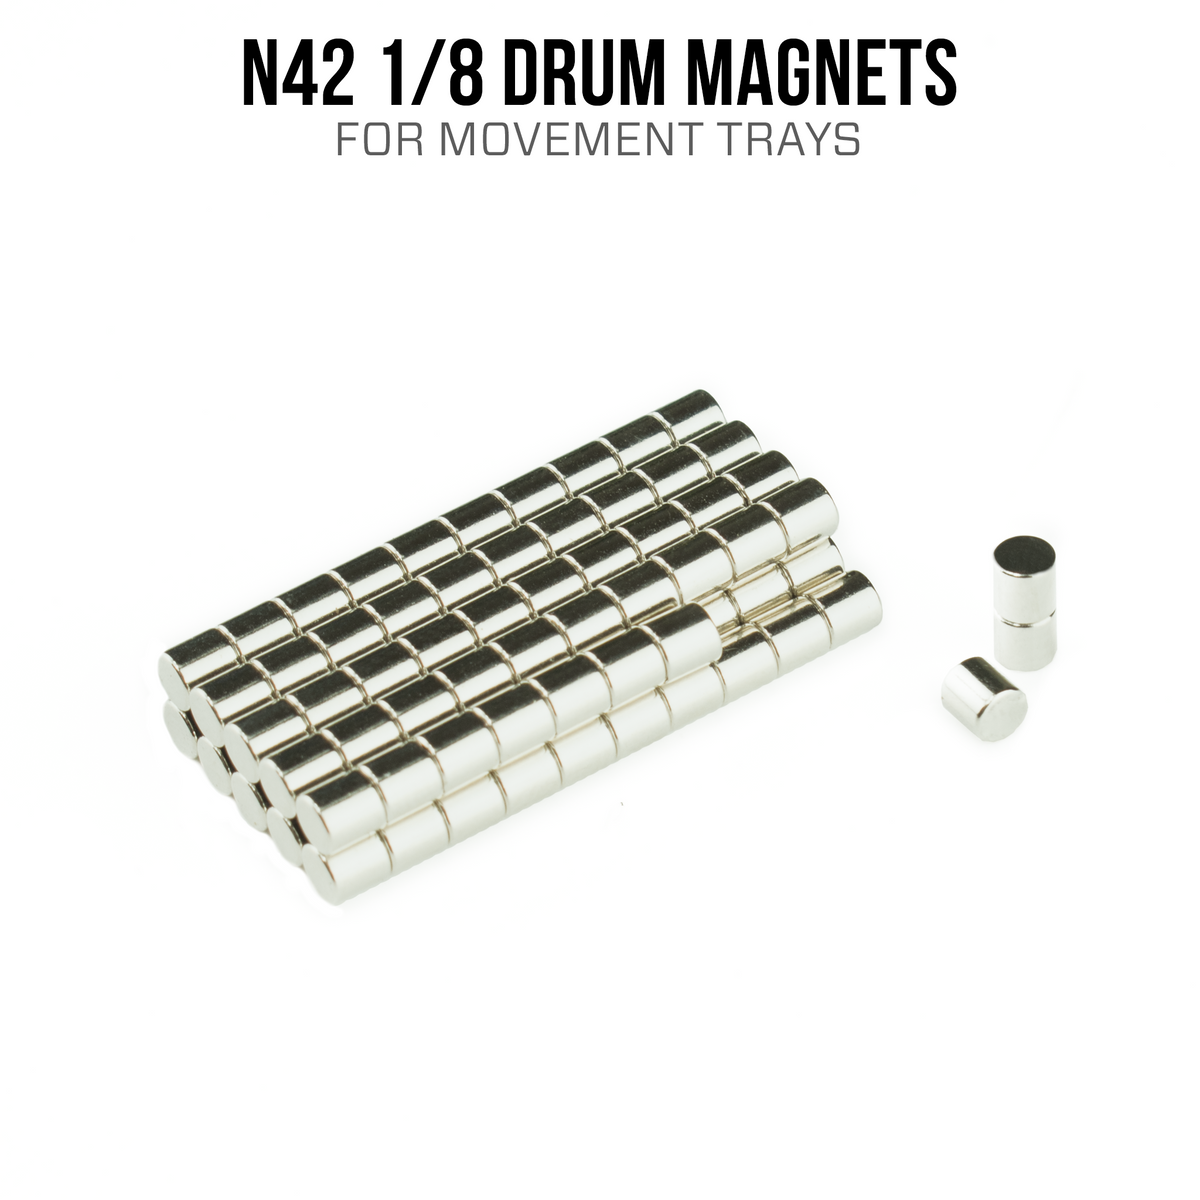 N42 1/8" Drum Magnets (R&F Bases)